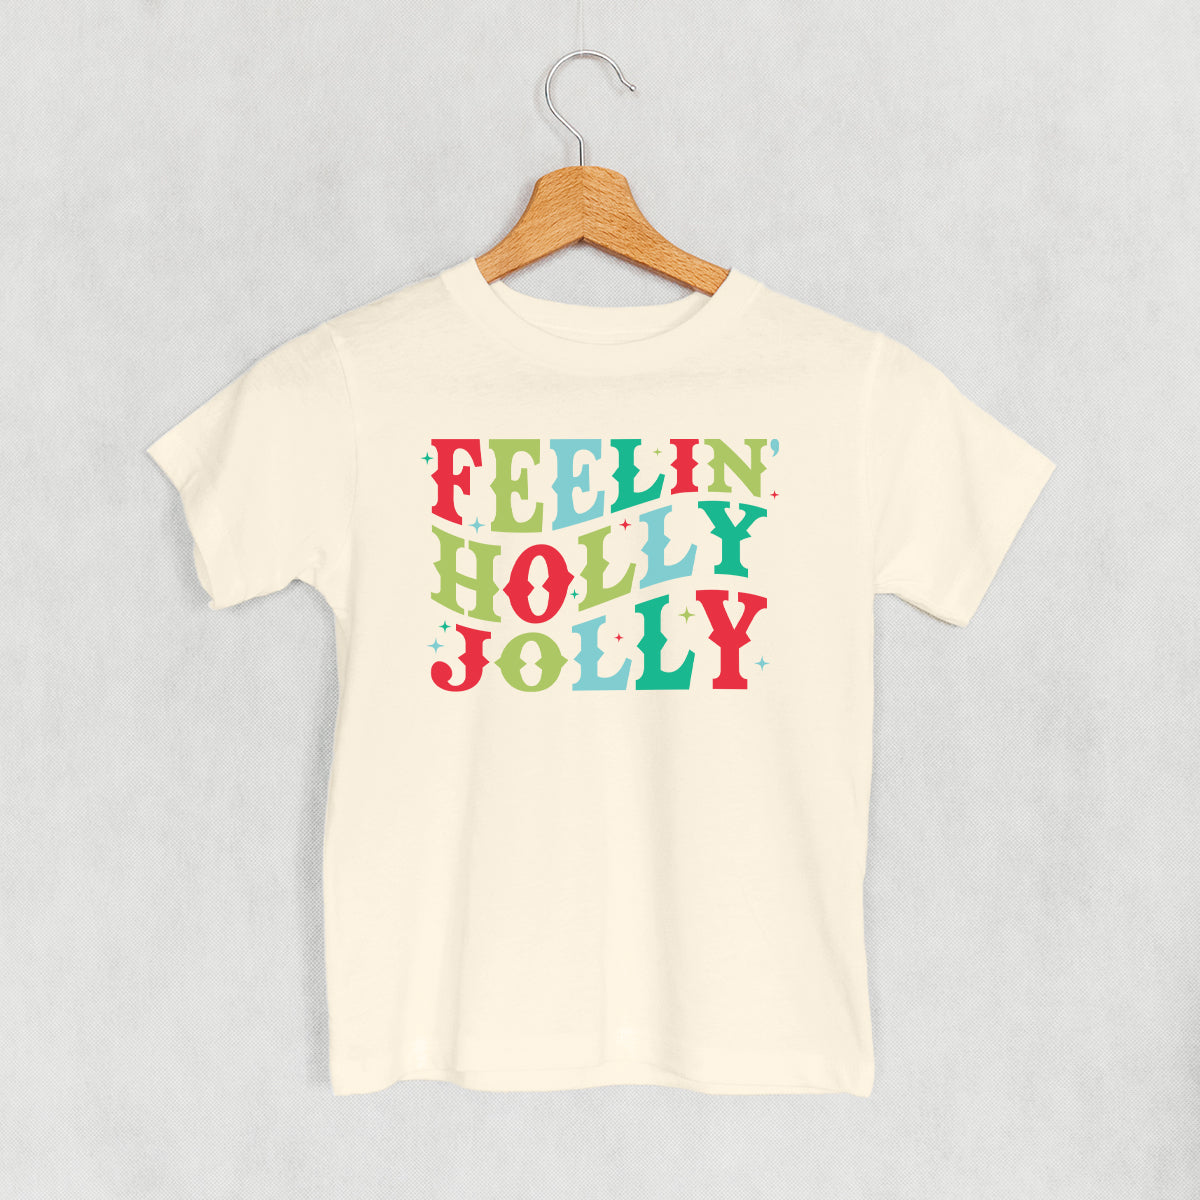 Feelin' Holly Jolly (Kids)